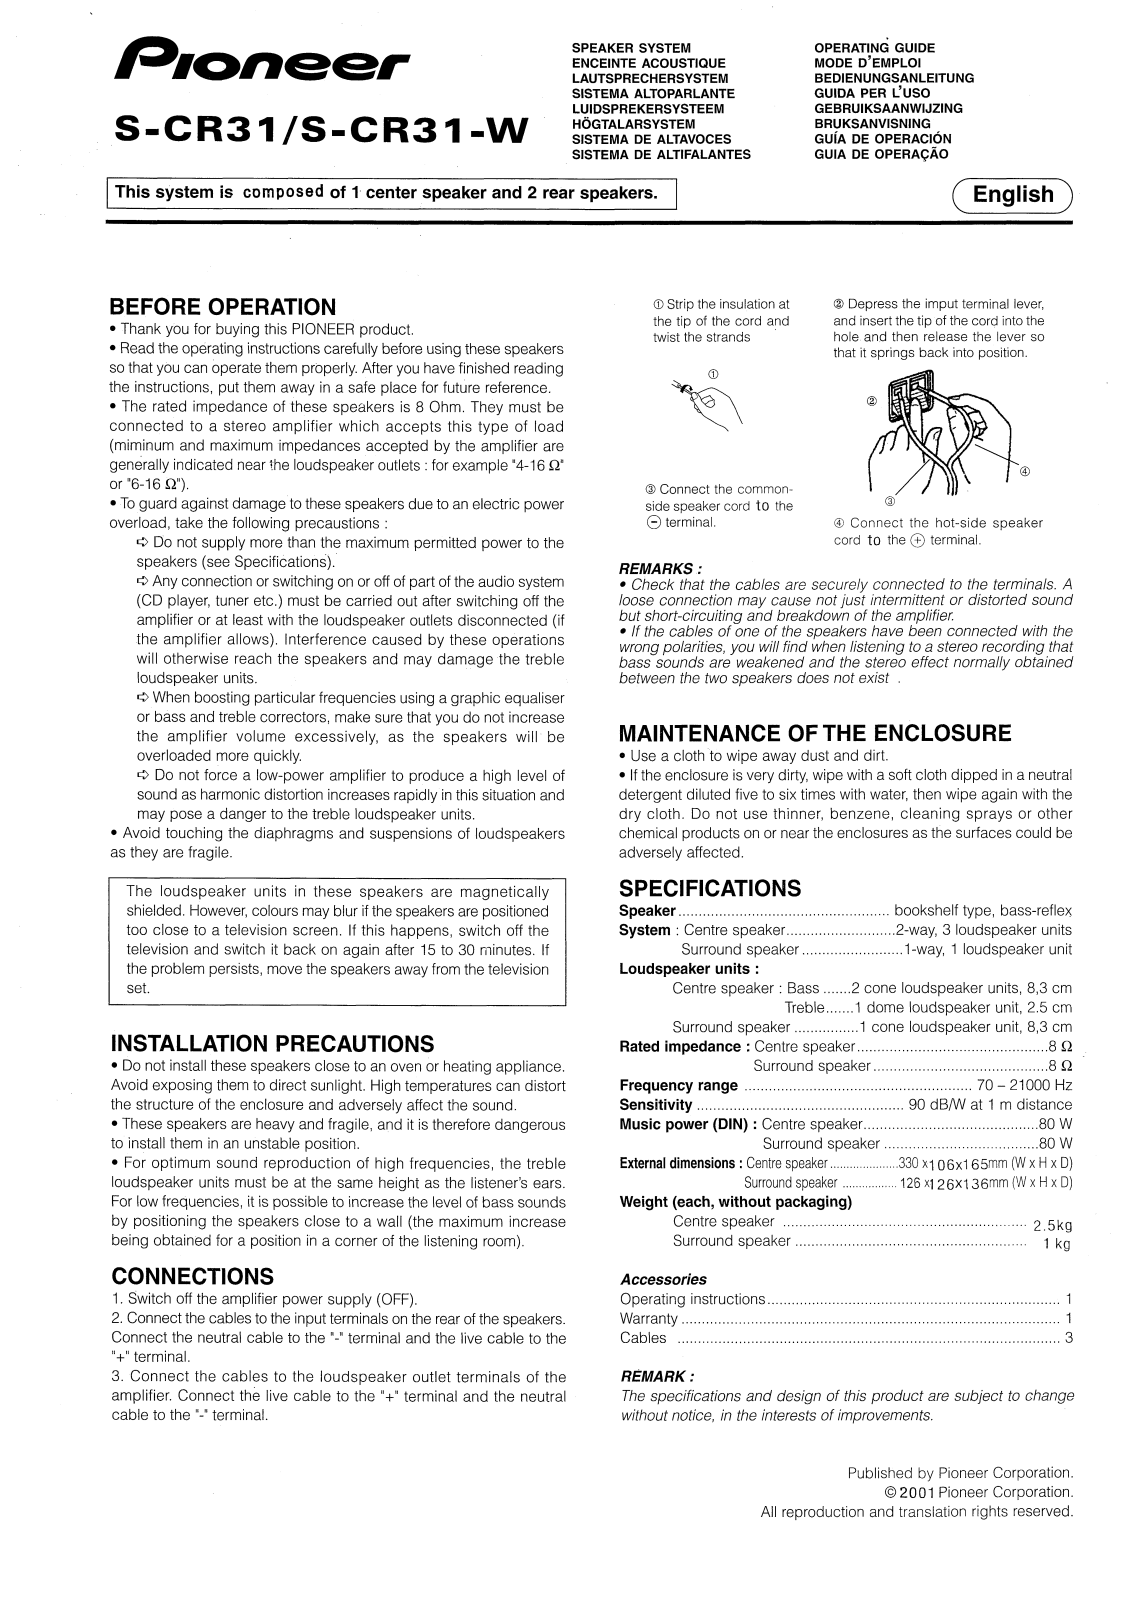 PIONEER S-CR31 User Manual